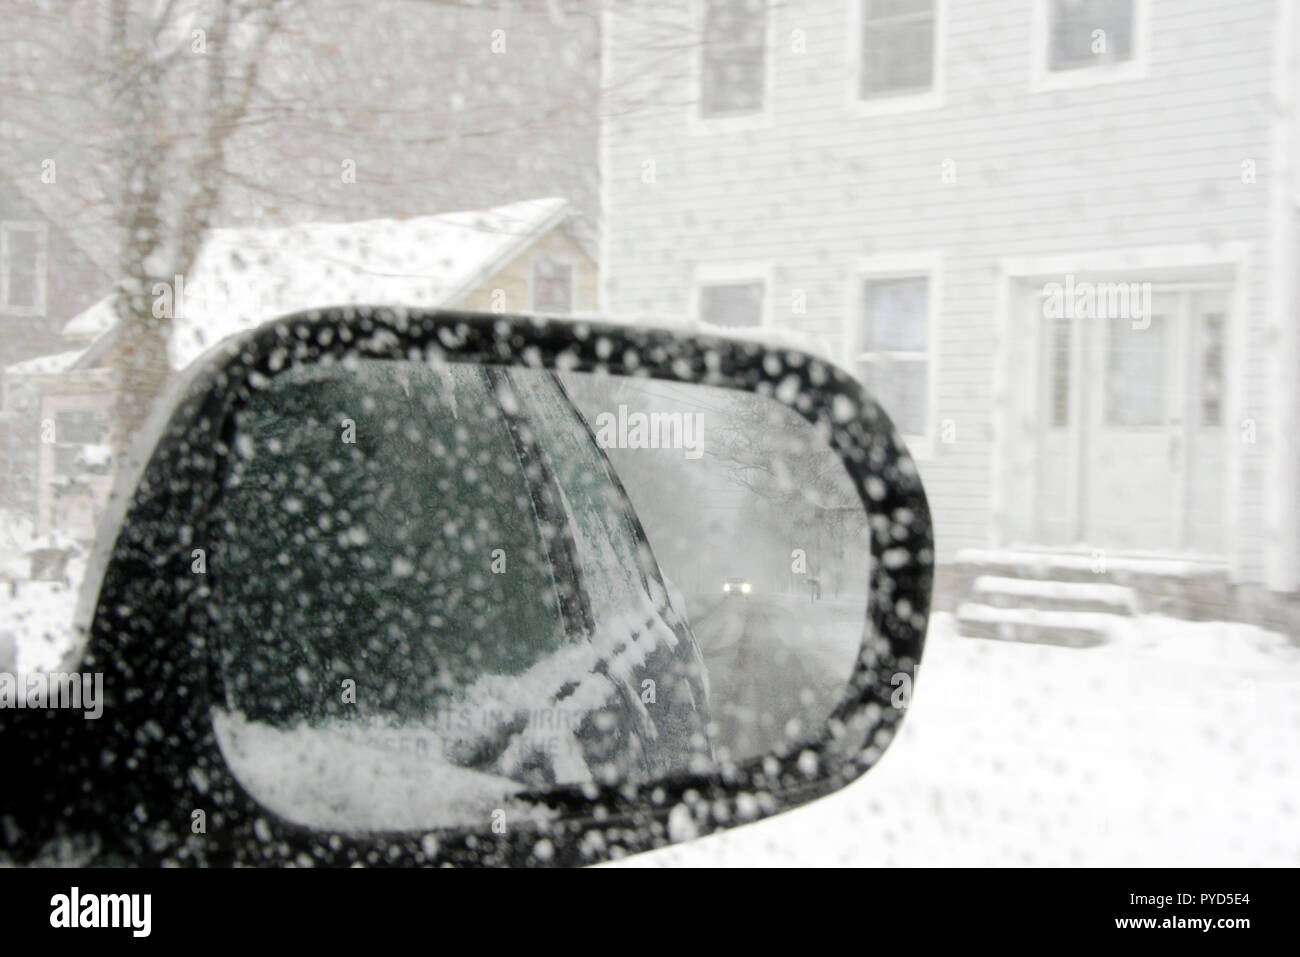 A snowy road as seen through the rear view mirror of a car Stock Photo